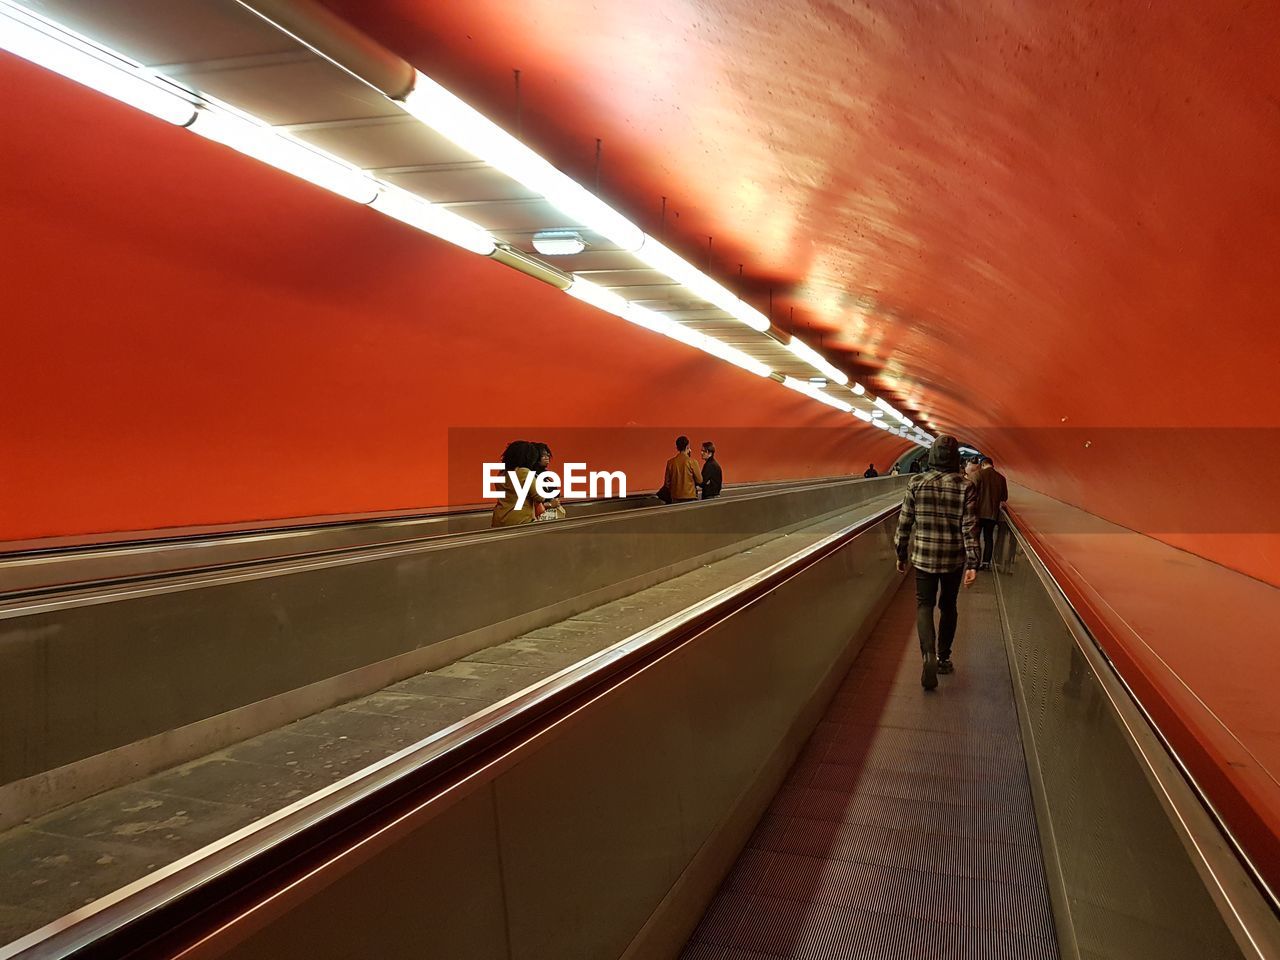 People walking on escalator in subway